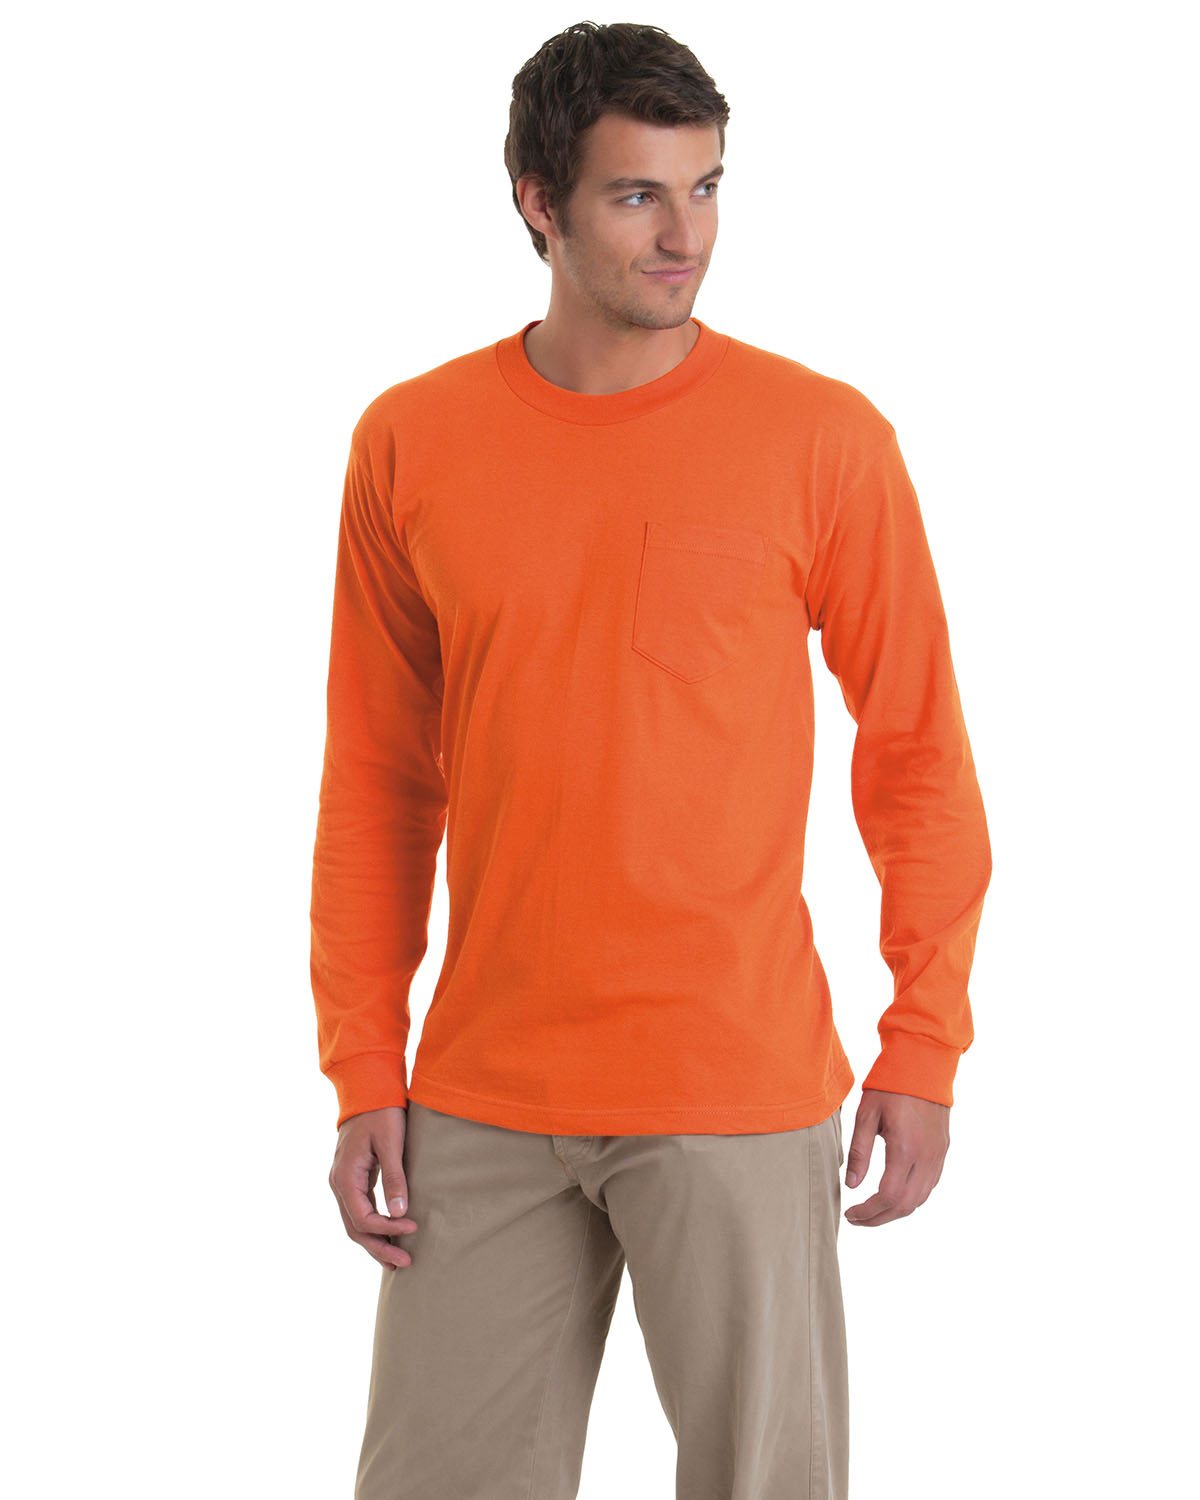 Bayside BA8100 - Adult Long-Sleeve Tee with Pocket $12.68 - T-Shirts